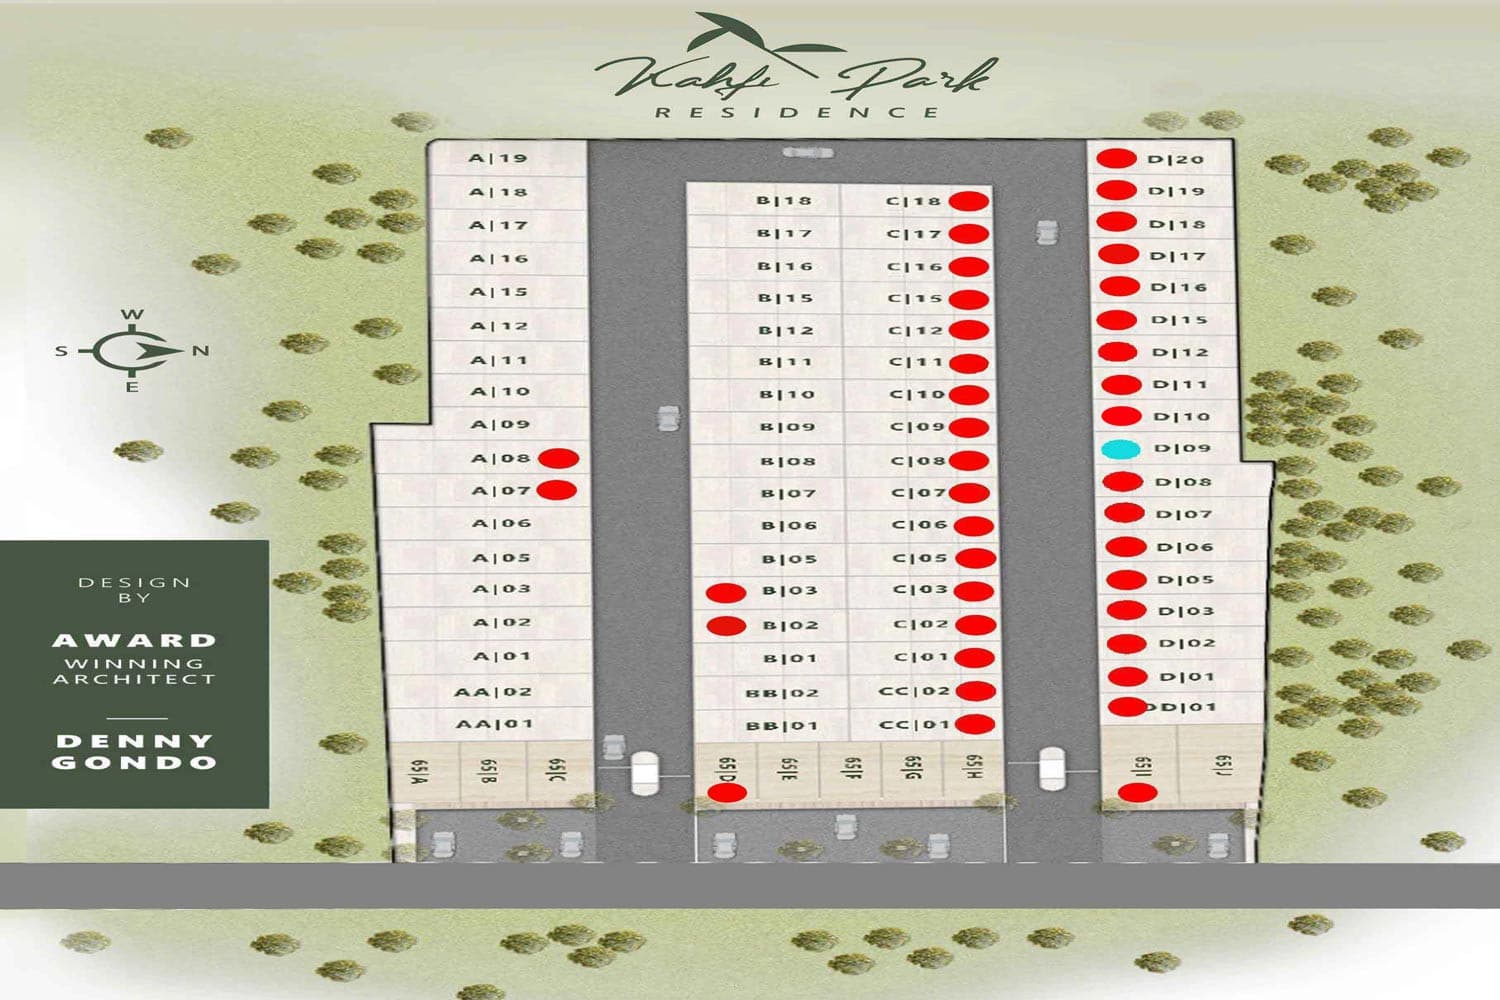 Siteplan Kahfi Park Residence